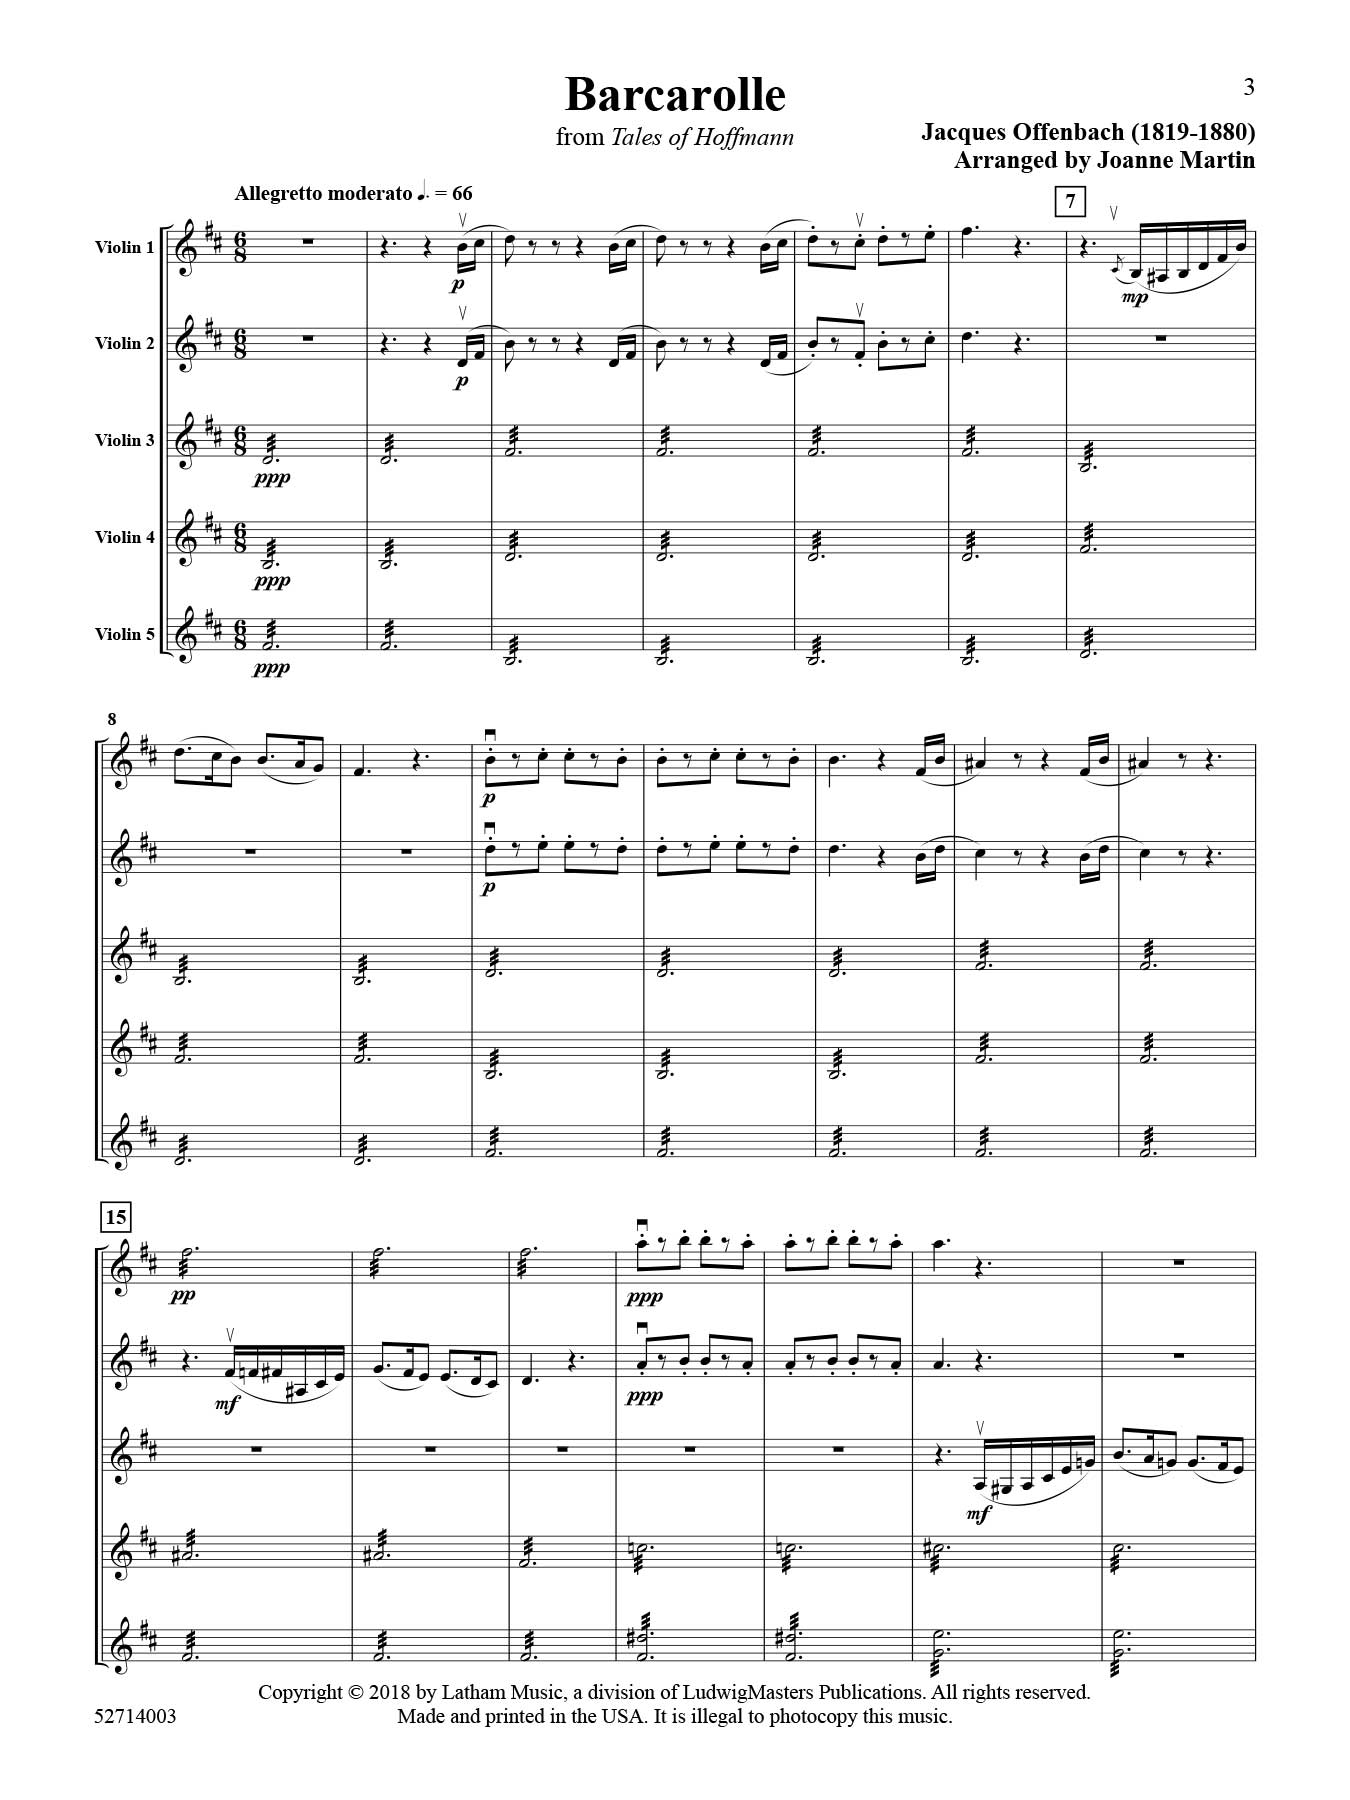 barcarolle-violin-quintet-score-sample.jpg